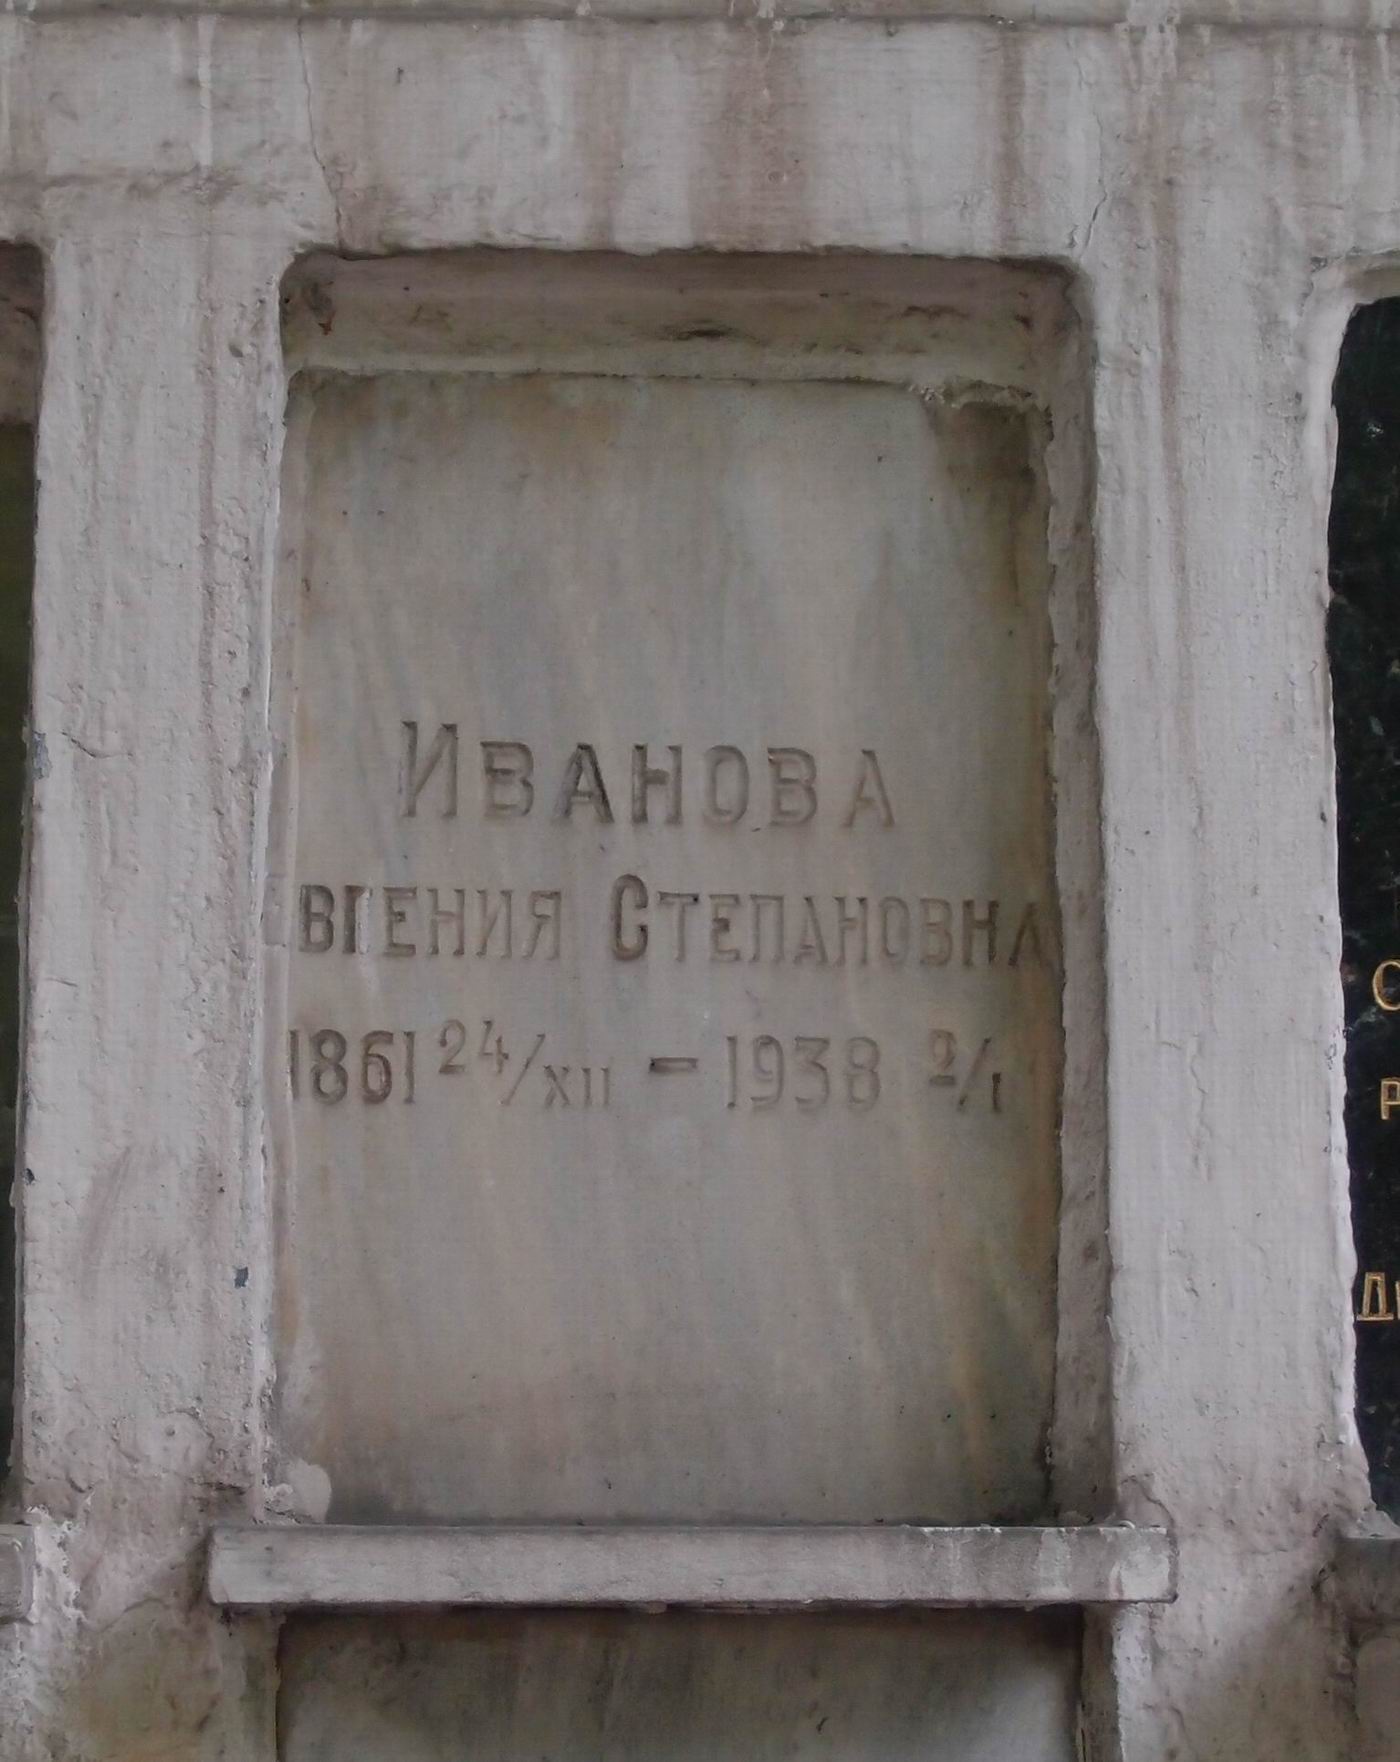 Плита на нише Ивановой Е.С. (1861-1938), на Новодевичьем кладбище (колумбарий [11]-7-1).